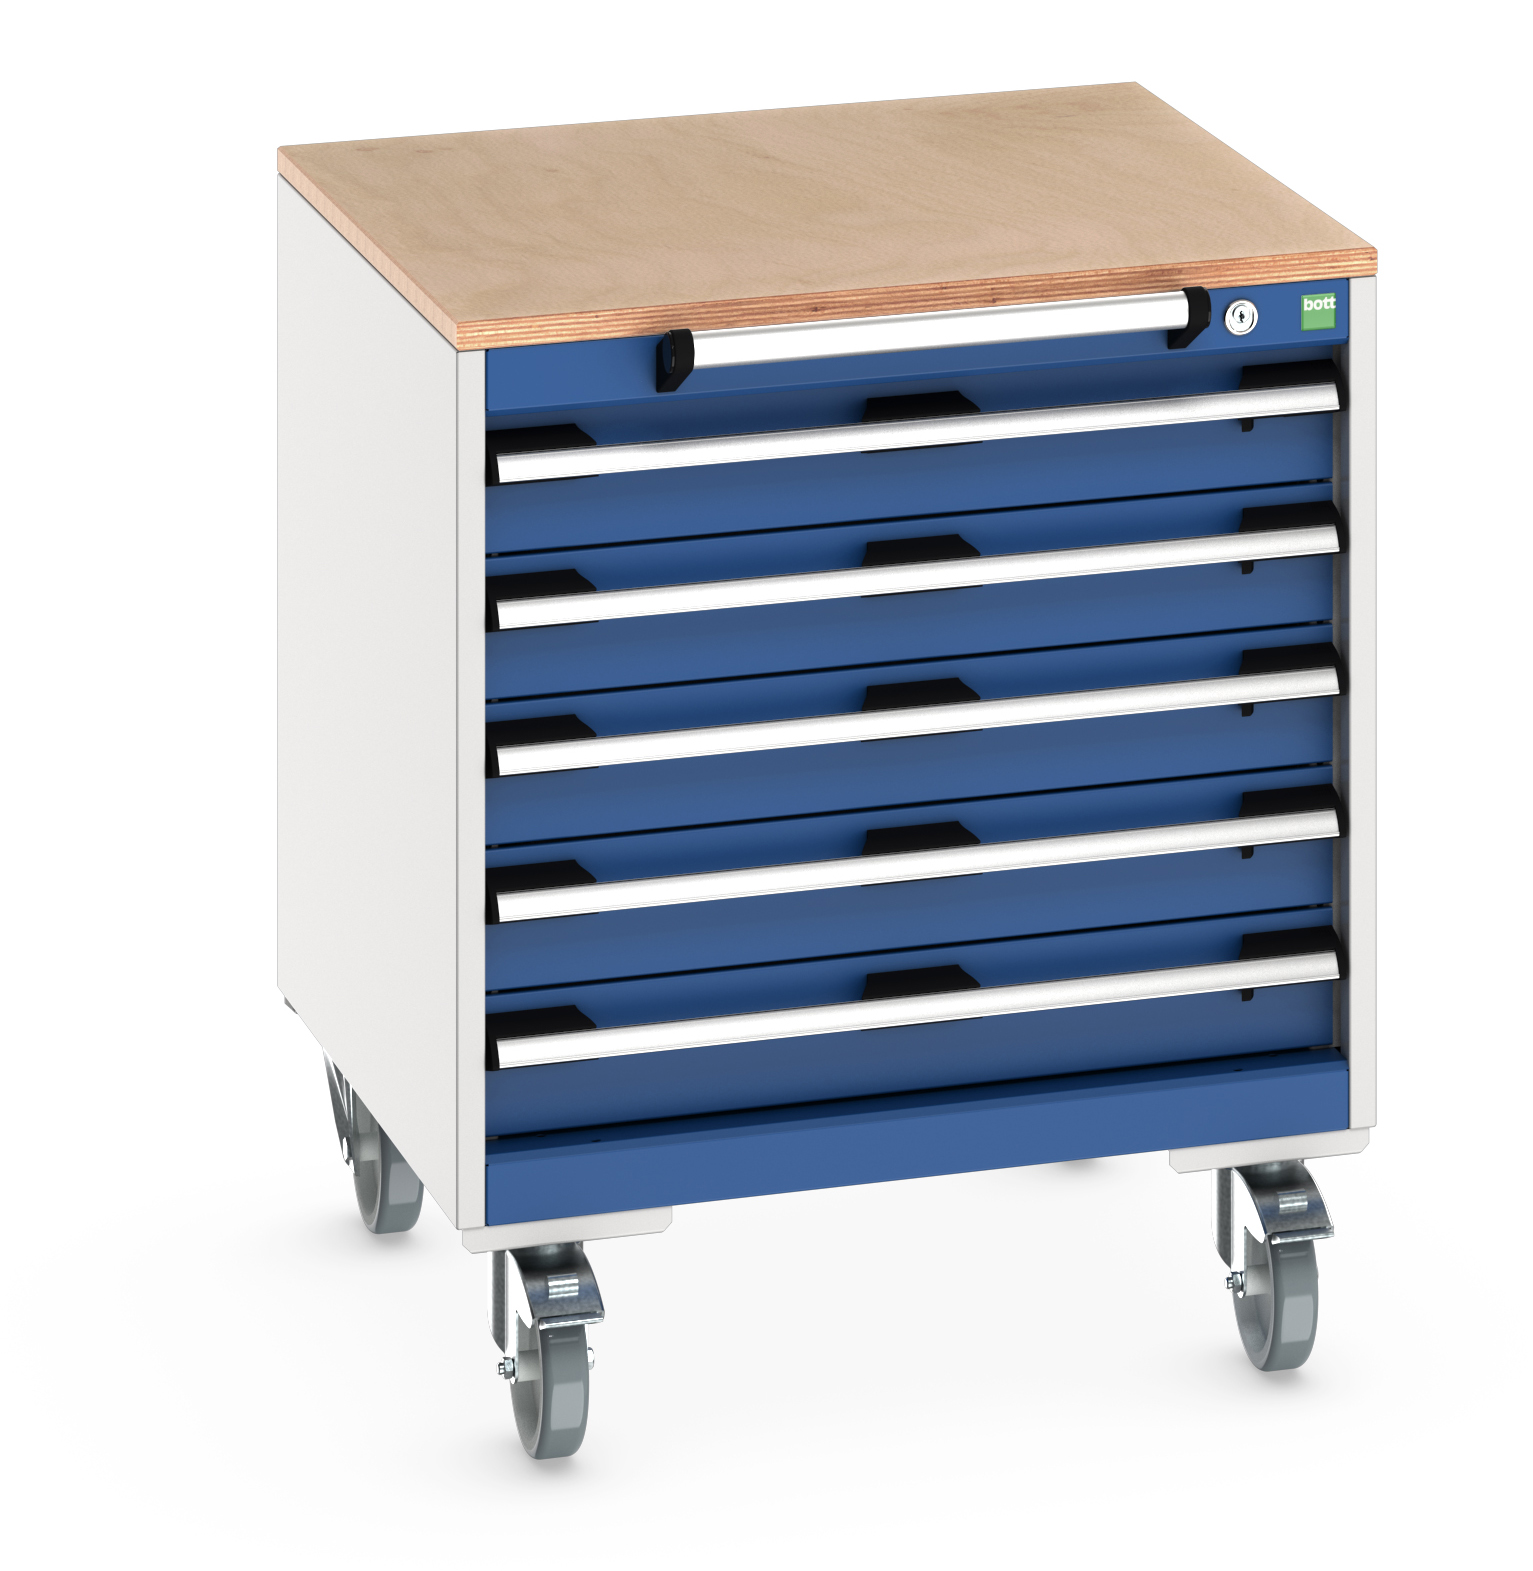 Bott Cubio Mobile Drawer Cabinet With 5 Drawers & Multiplex Worktop - 40402145.11V